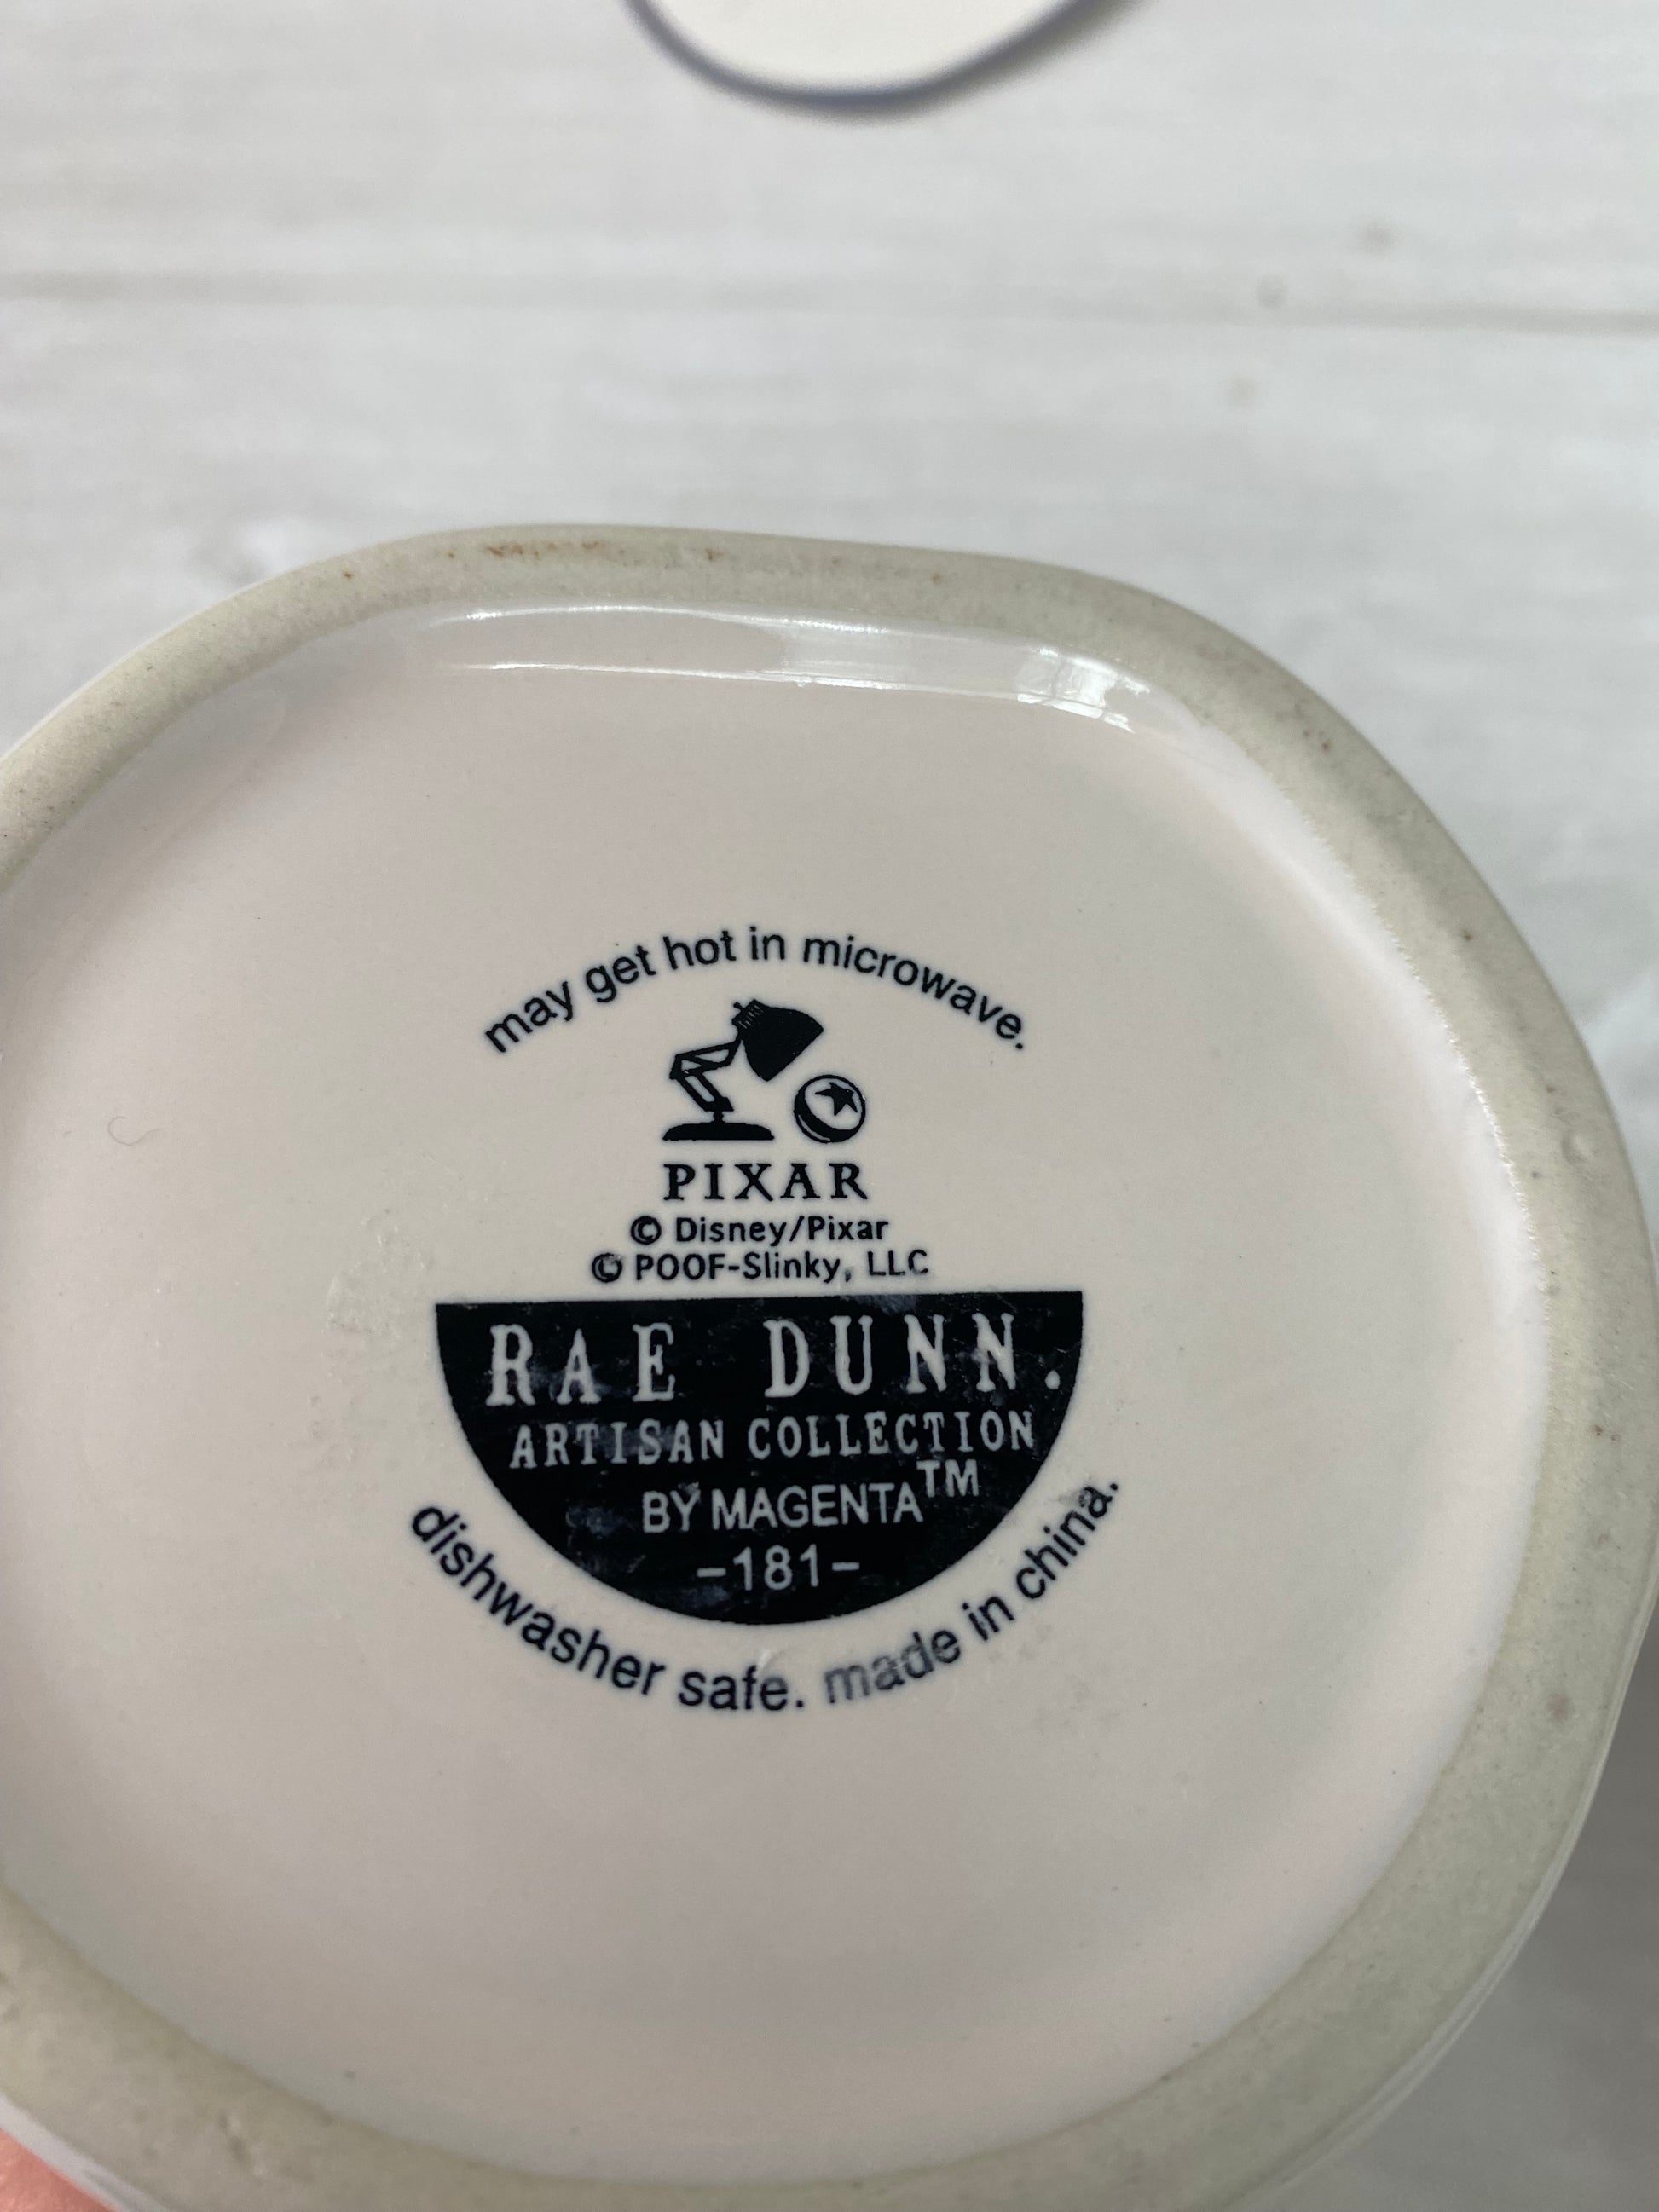 Rae Dunn Toy Story The Claaaaw Mug – Mug Sense